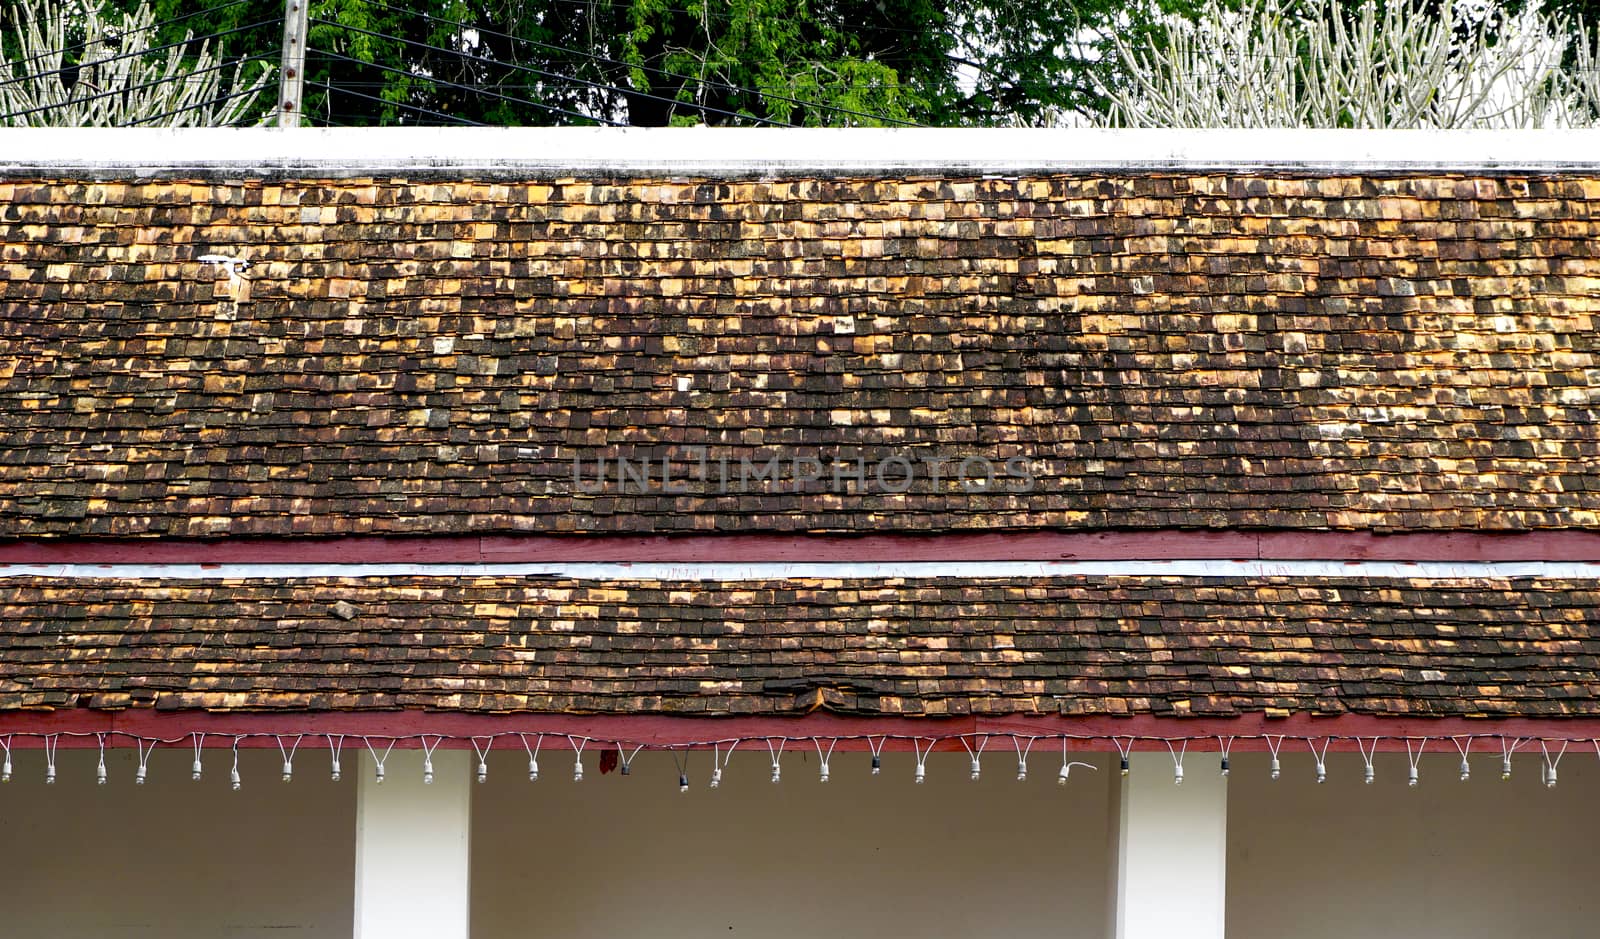 Layering of Temple corridor roof by polarbearstudio